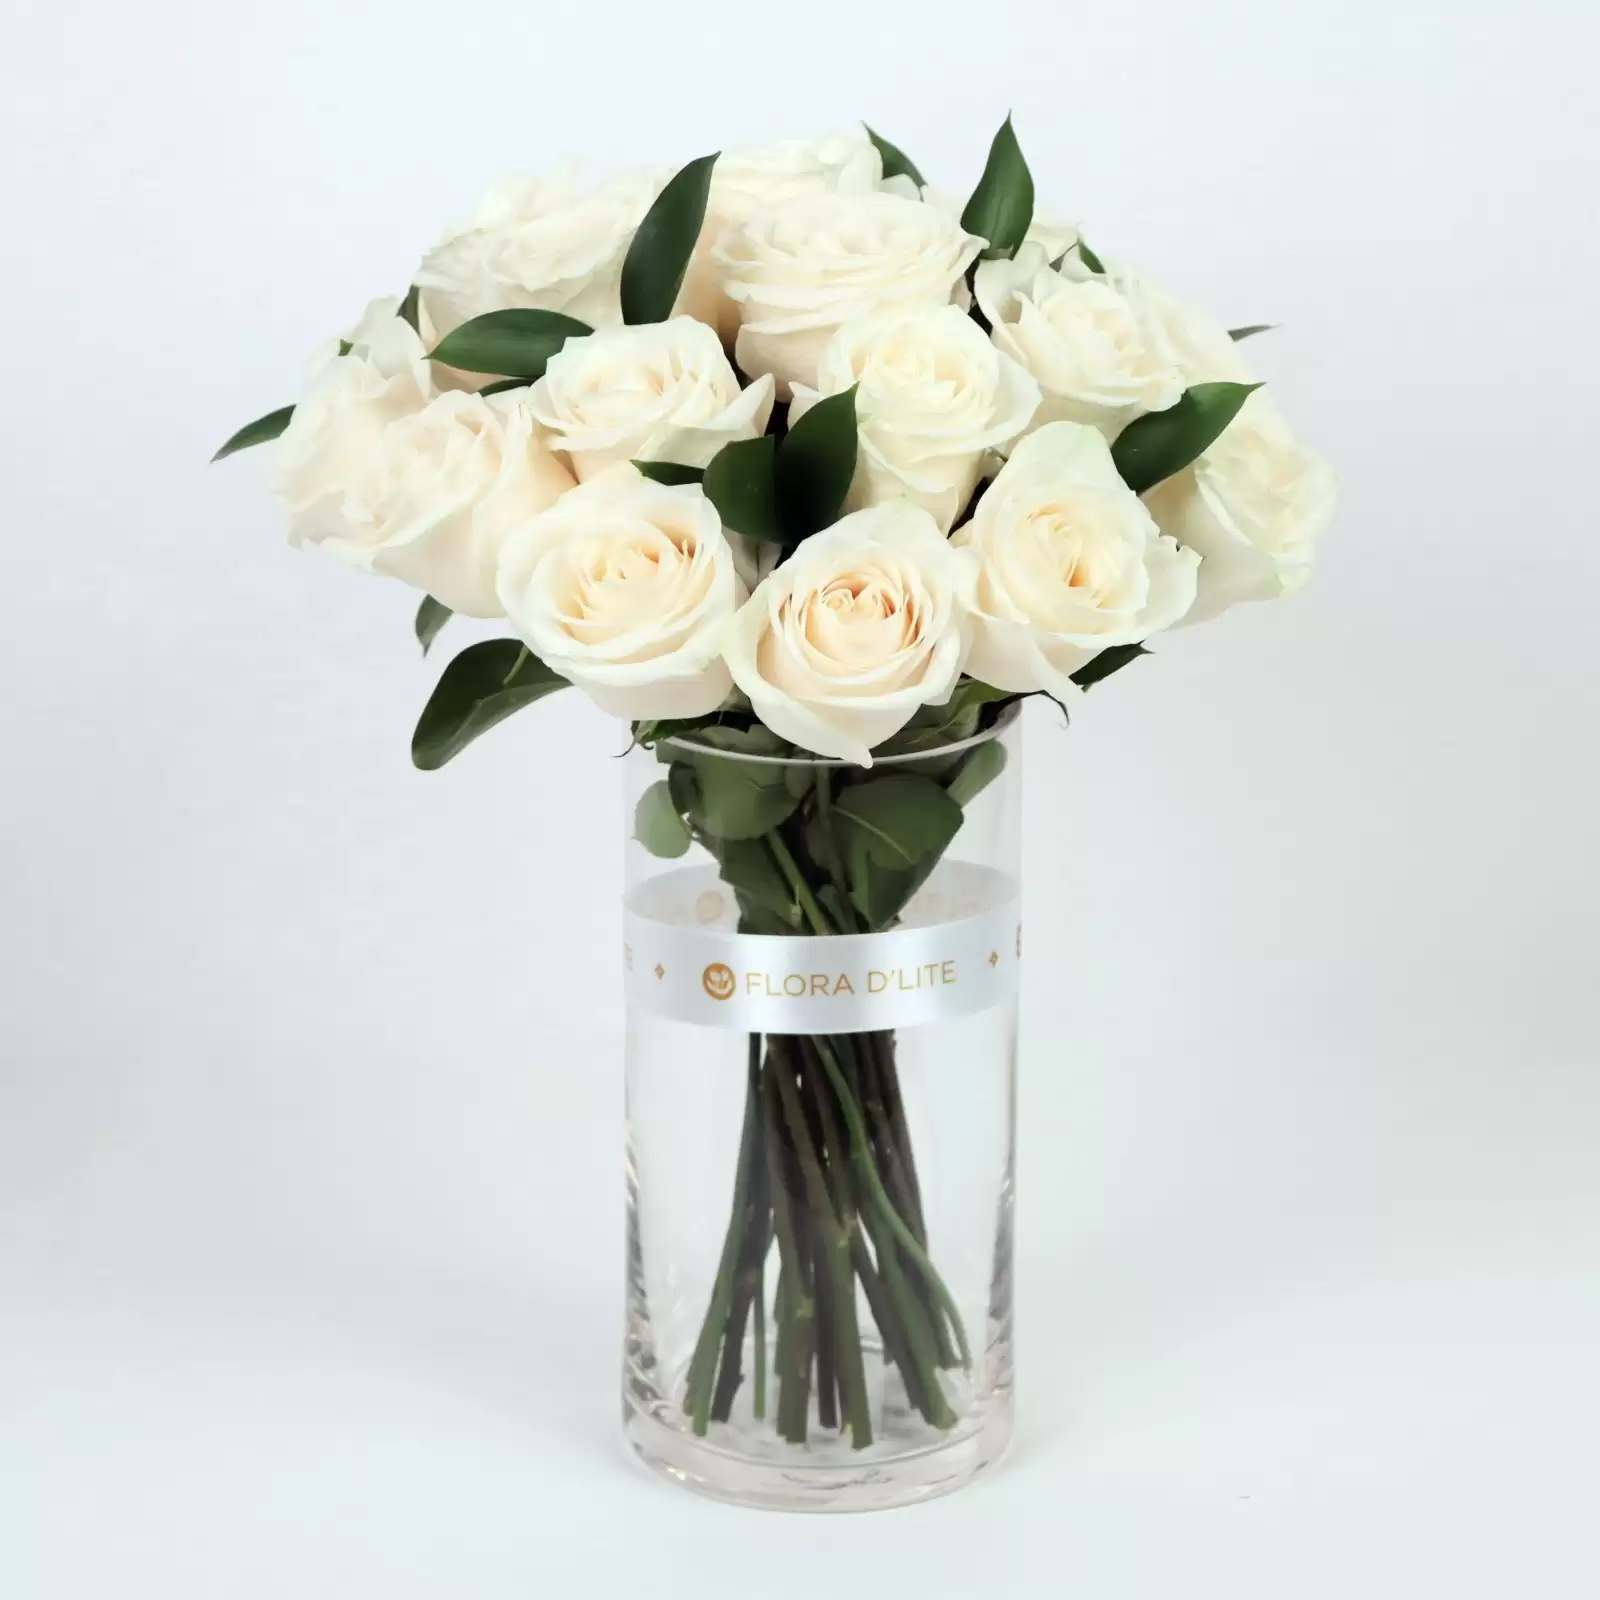 Morning Glory White Roses In A Vase - Flora D'lite